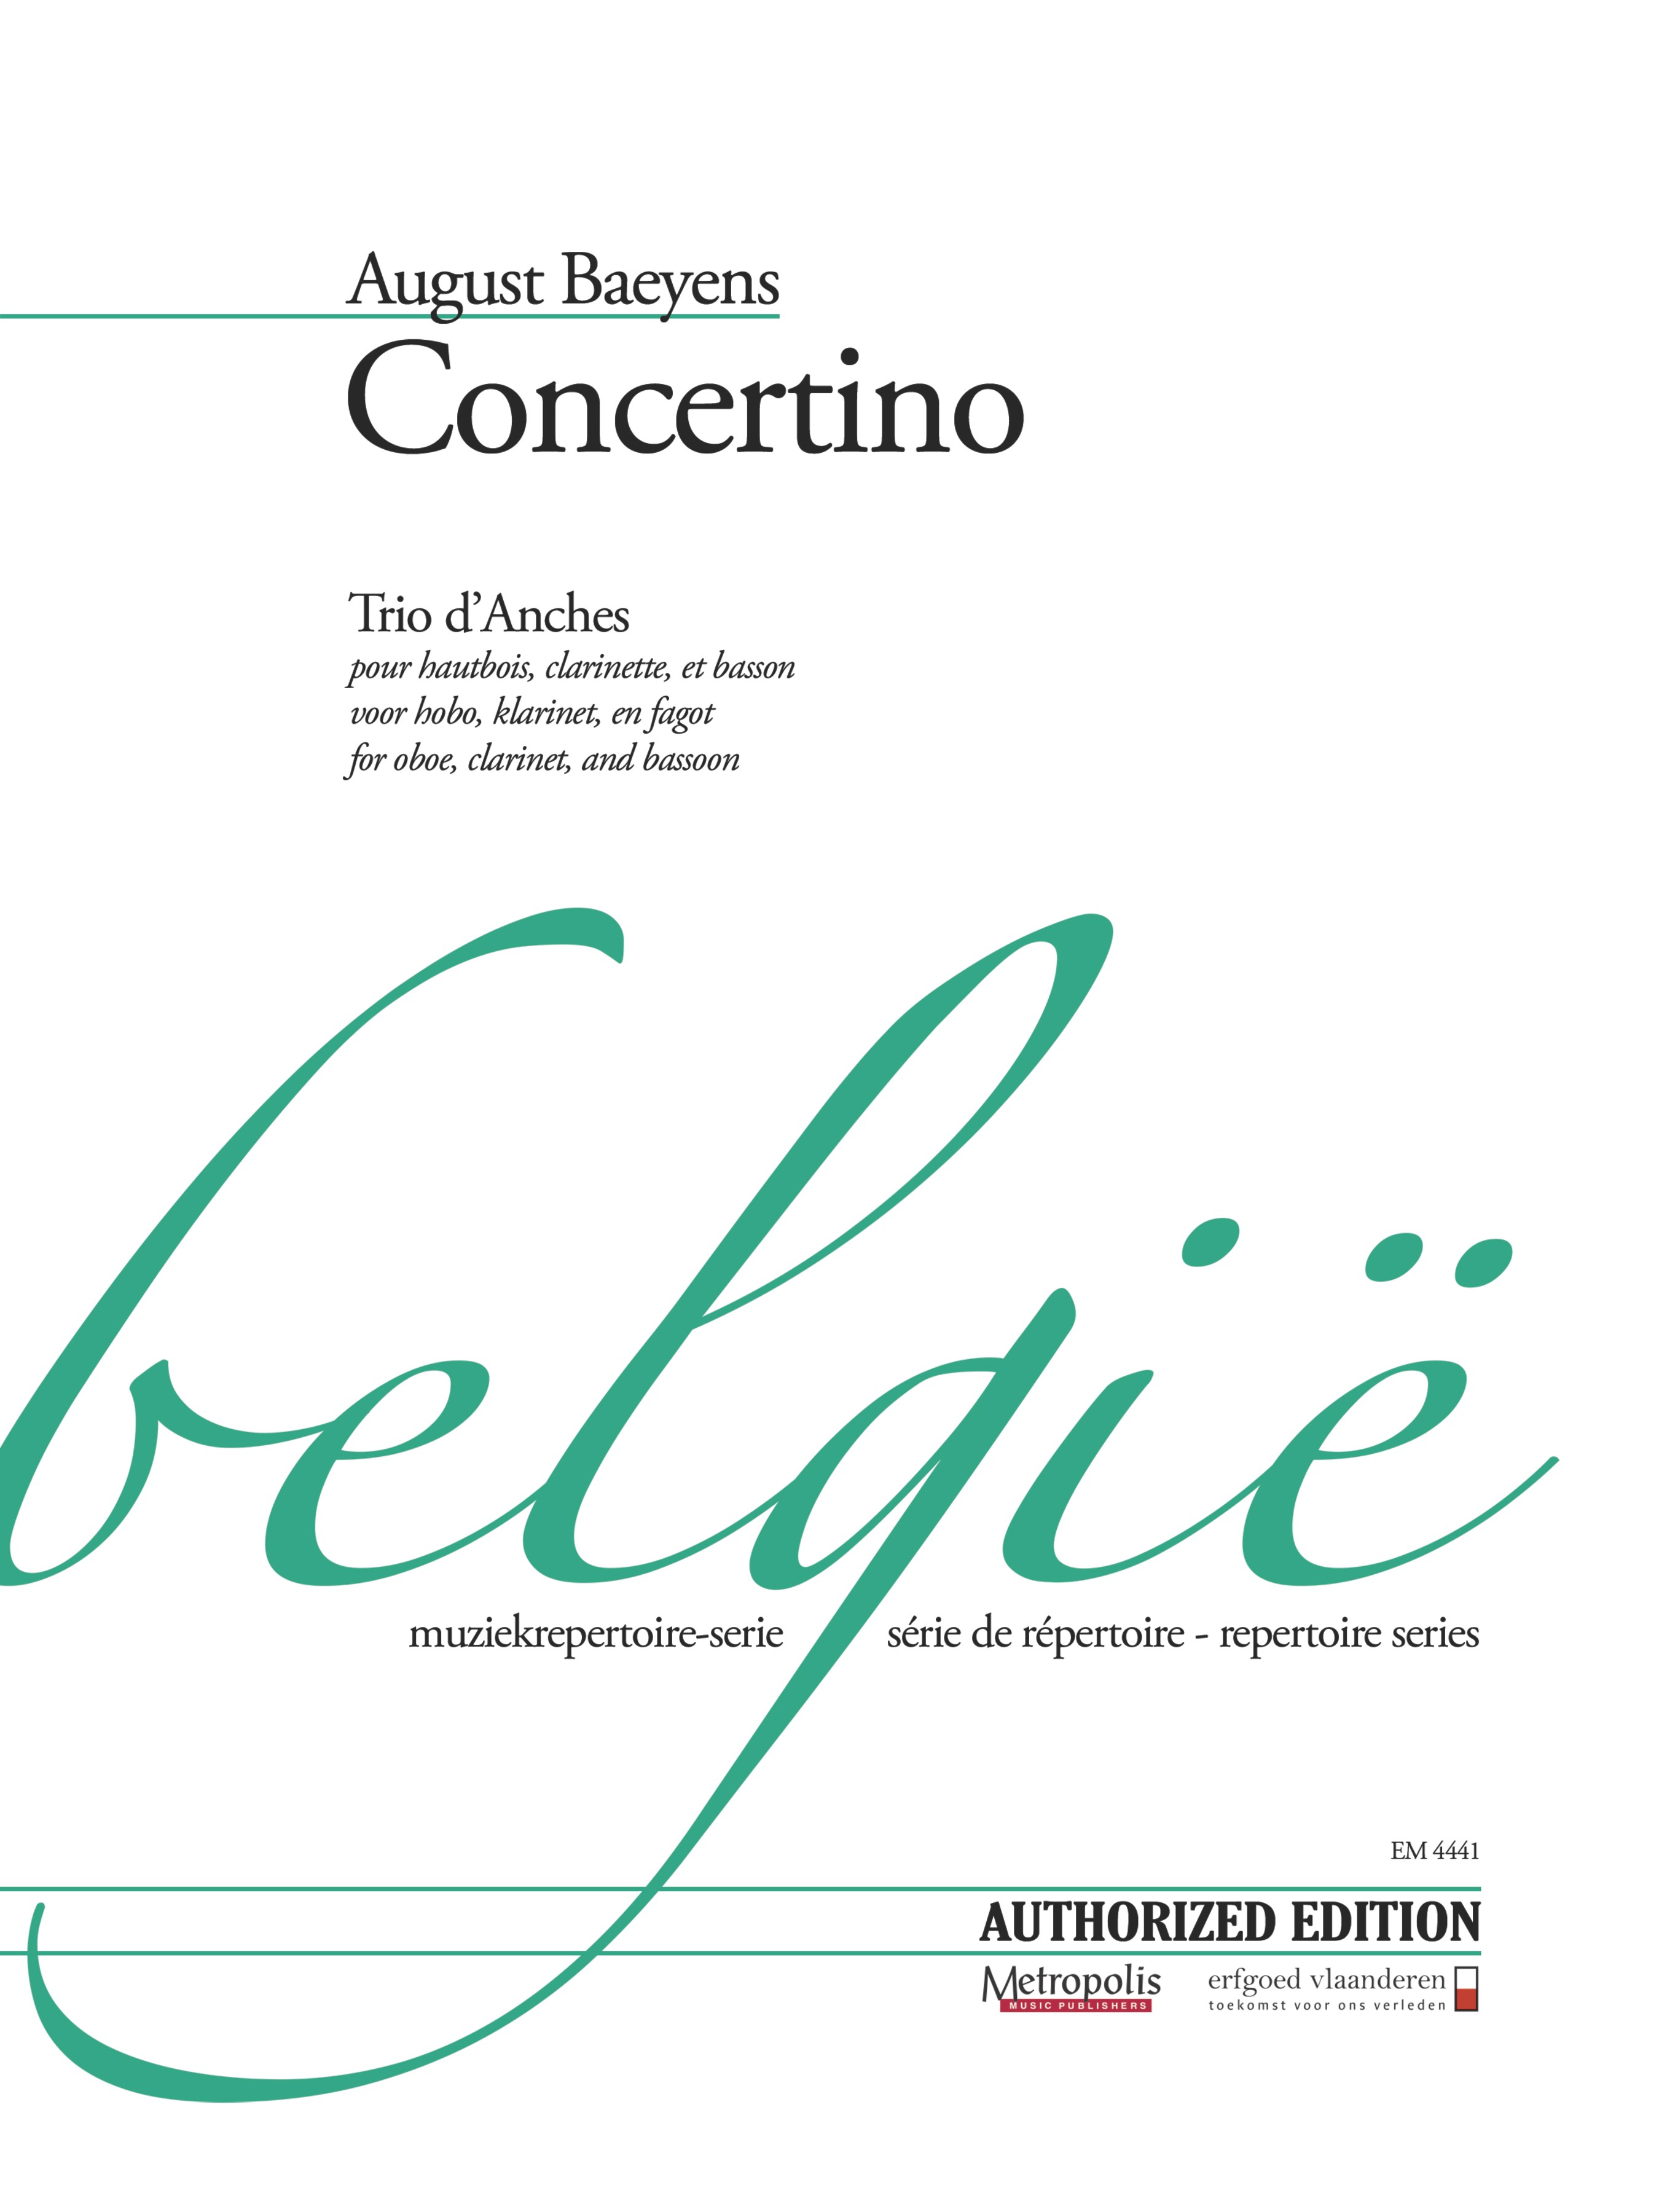 Concertino (BAEYENS AUGUST)